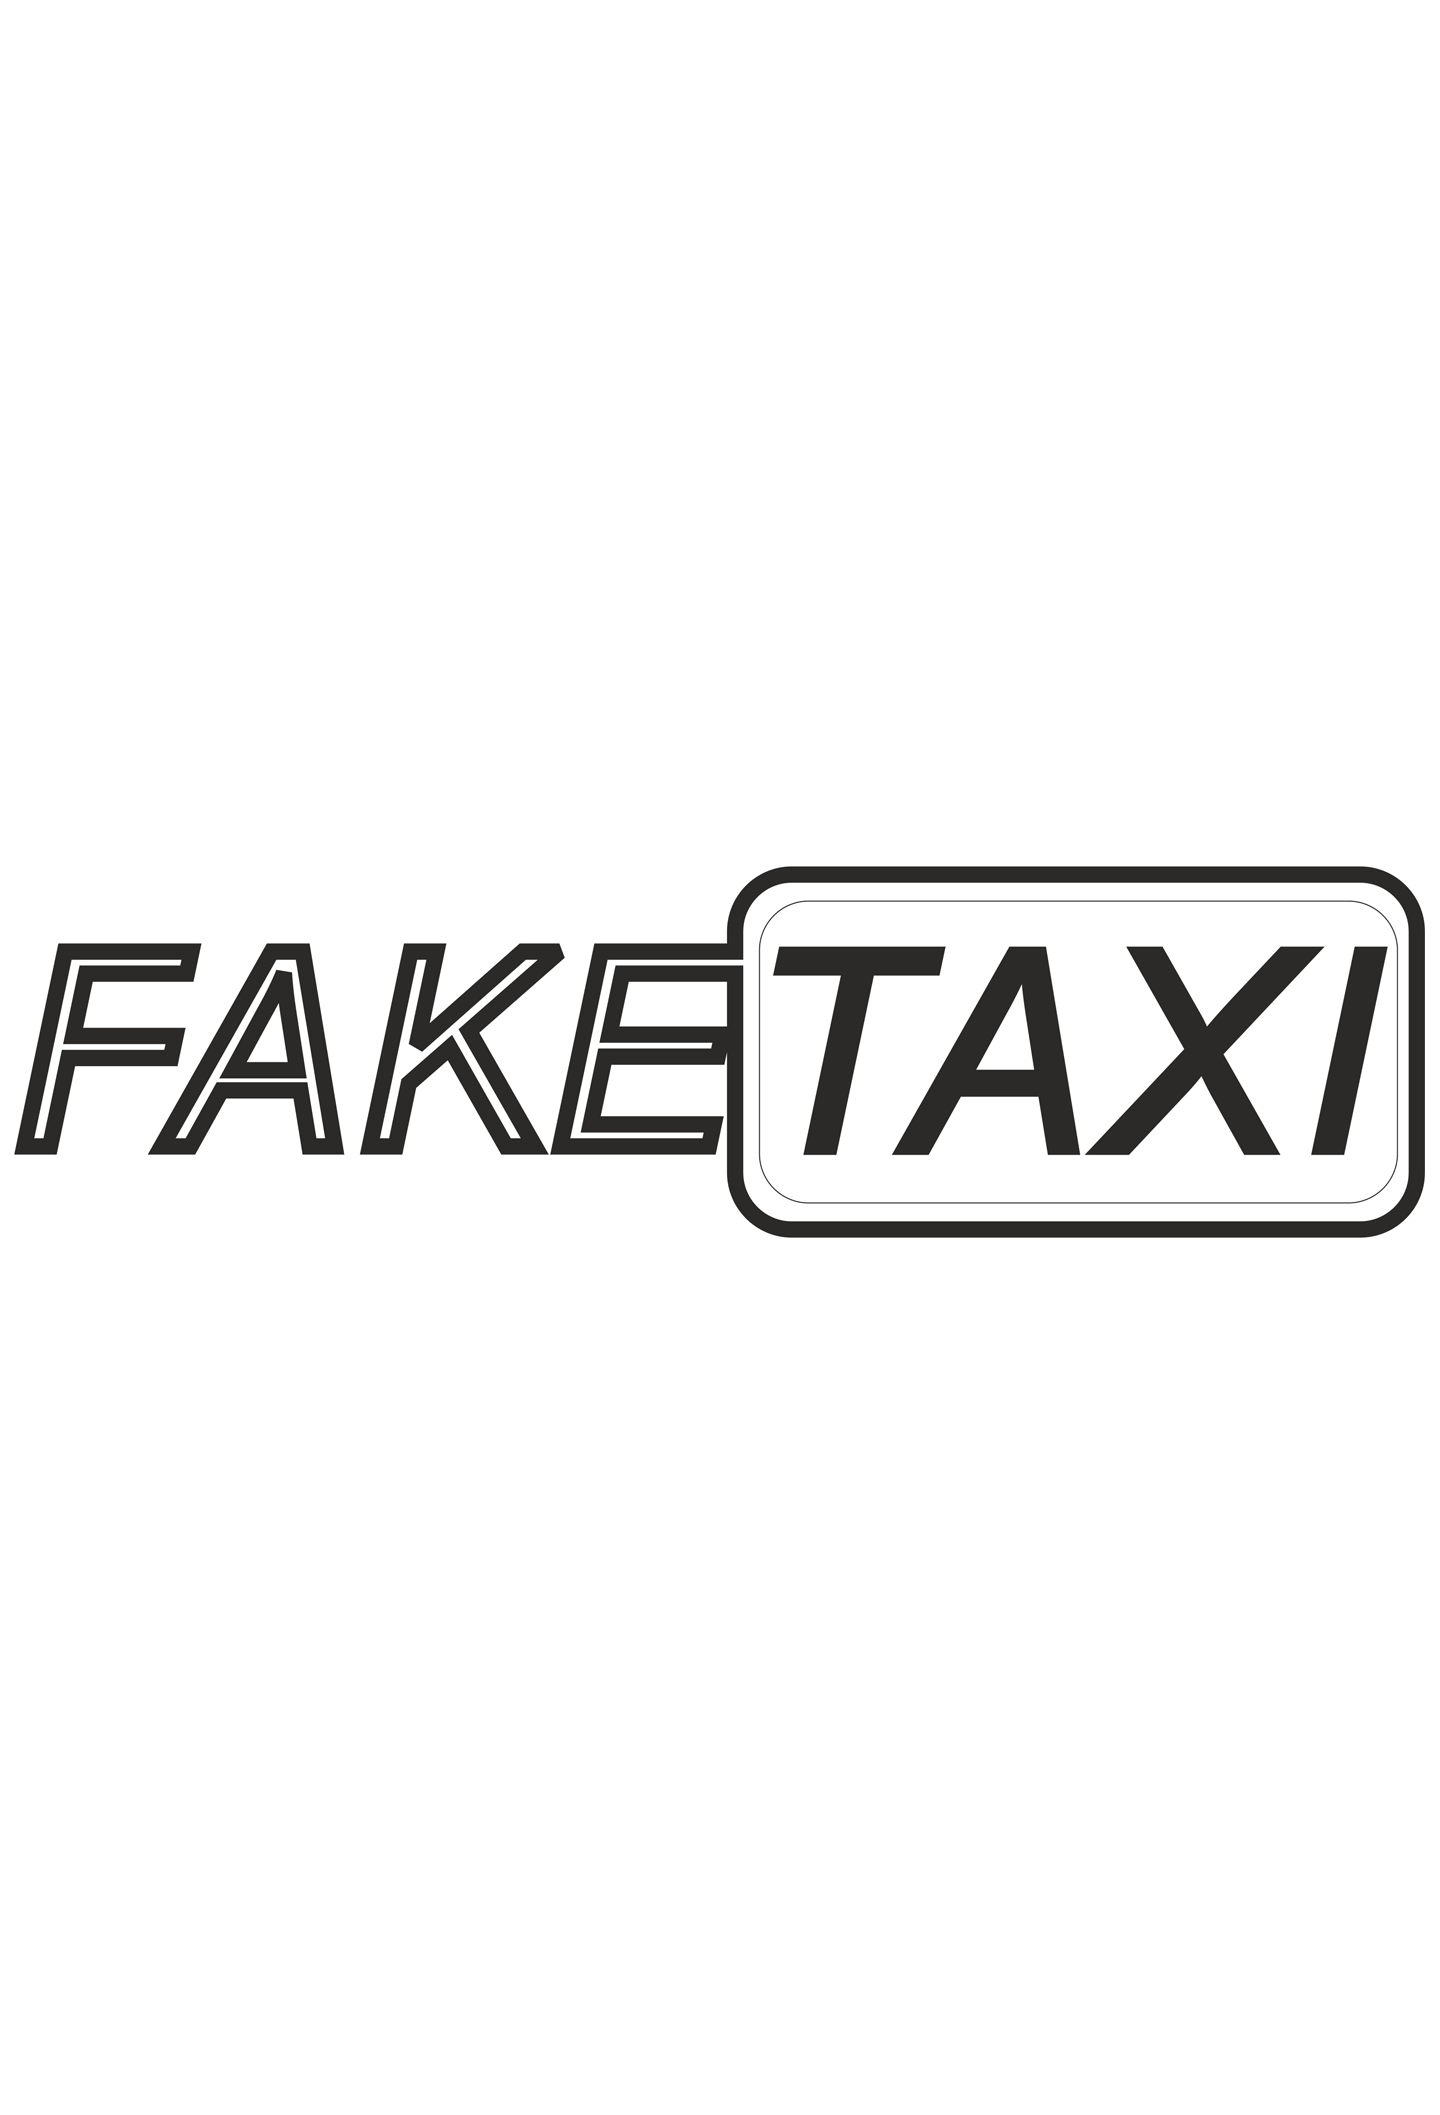 sticker-fake-taxi